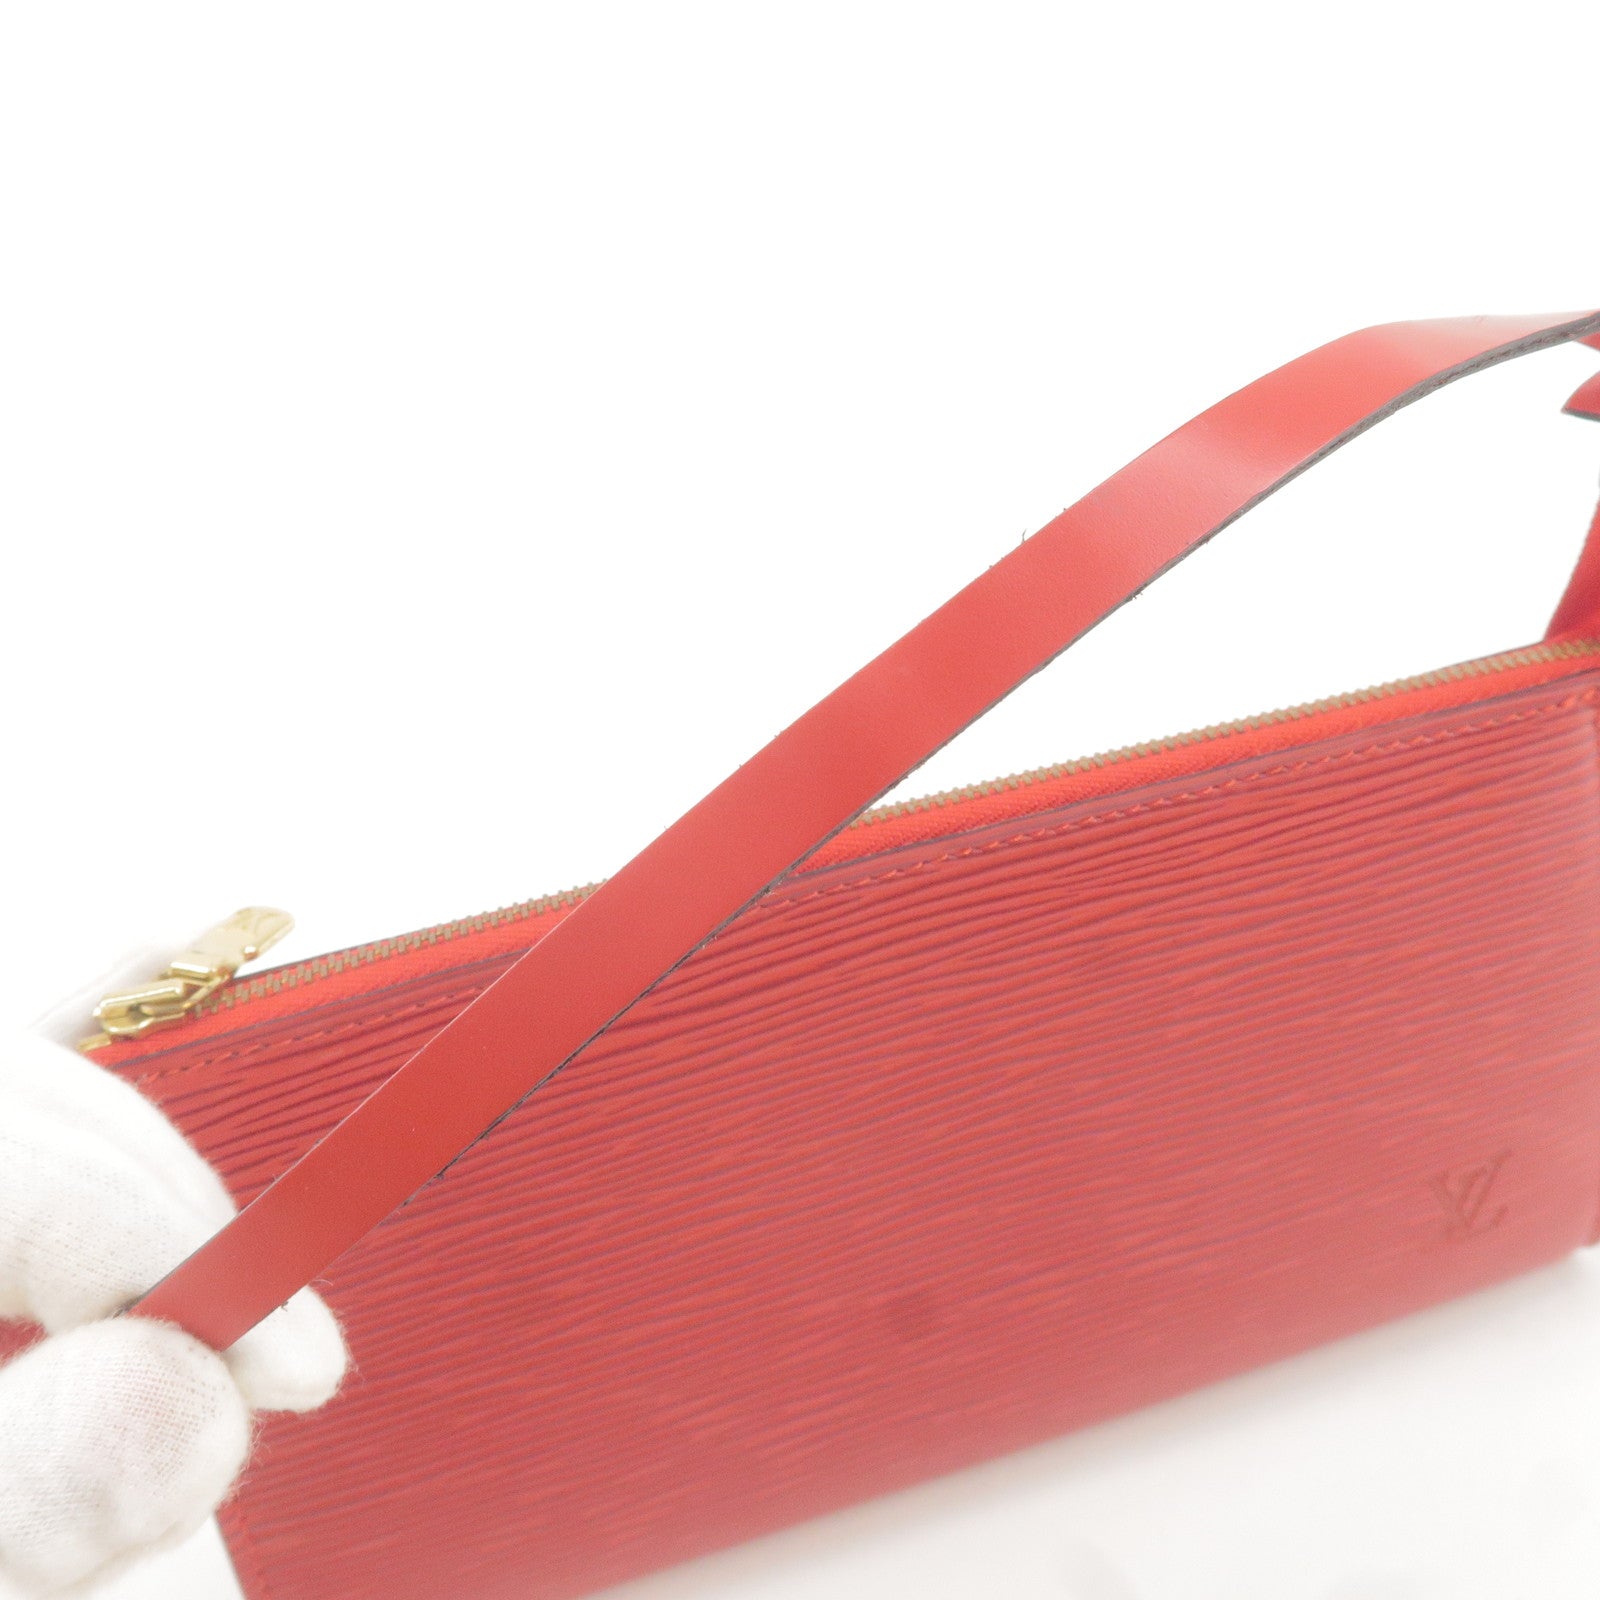 Louis Vuitton Red Epi Leather Pochette Bag.  Luxury Accessories